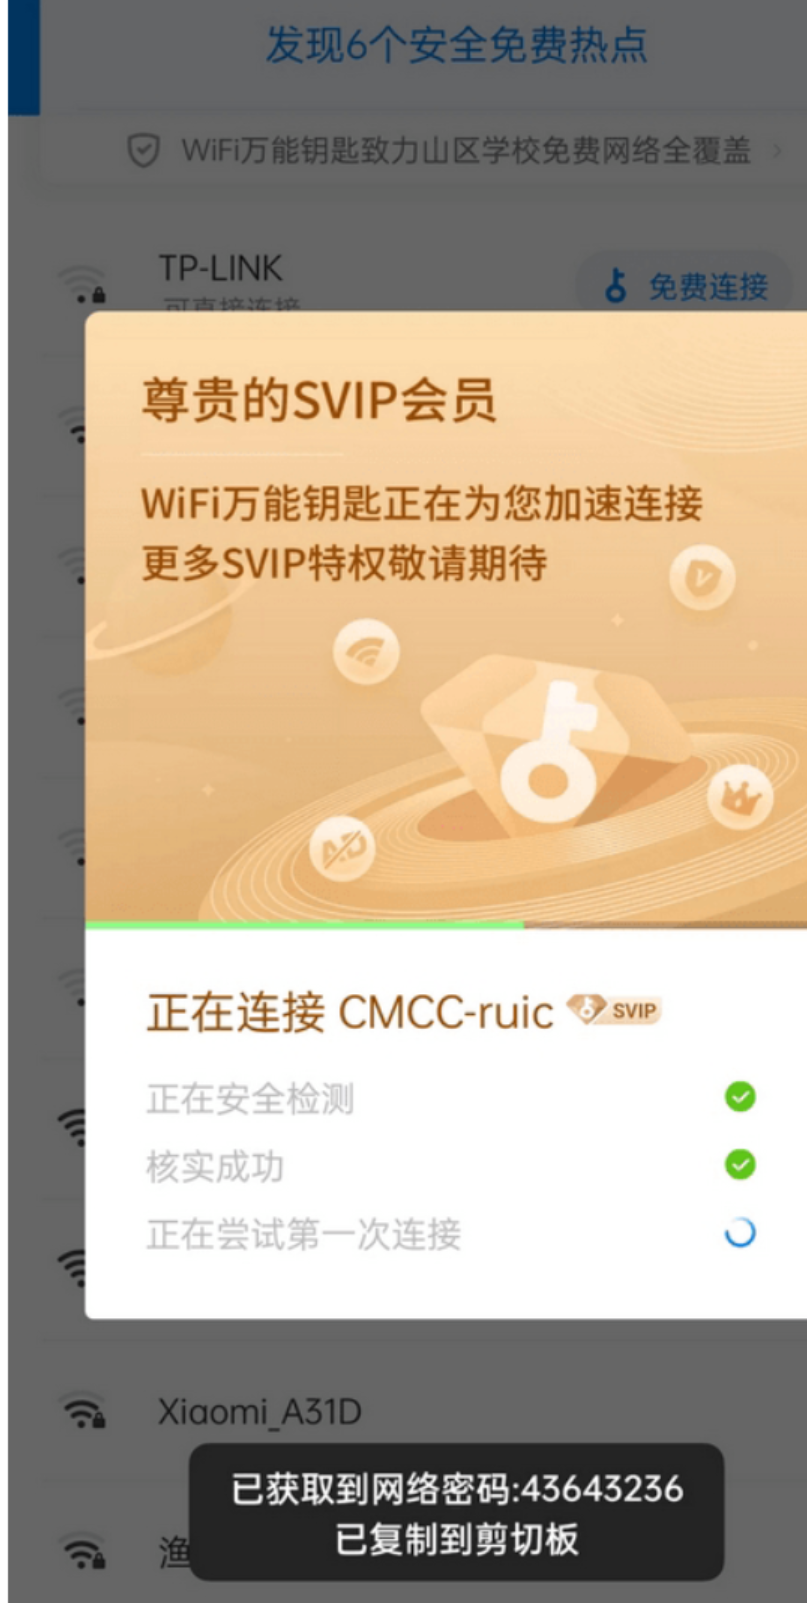 WiFi万能钥匙 v4.8.32  for Android 无广告显示密码版-木风软件站